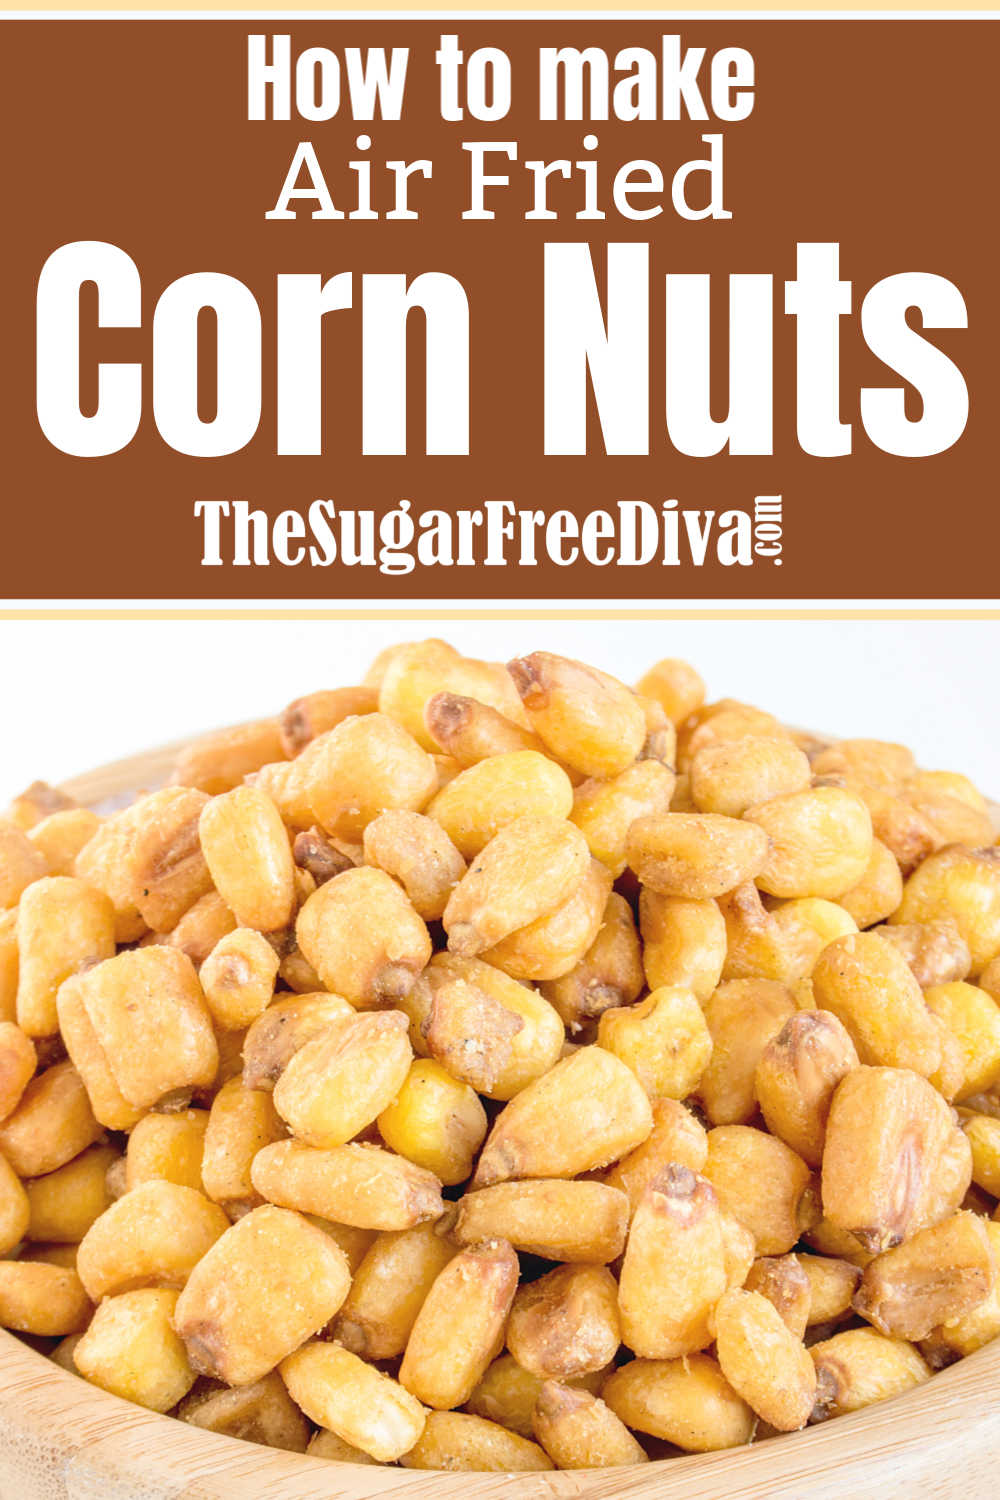 Air Fried Corn Nuts